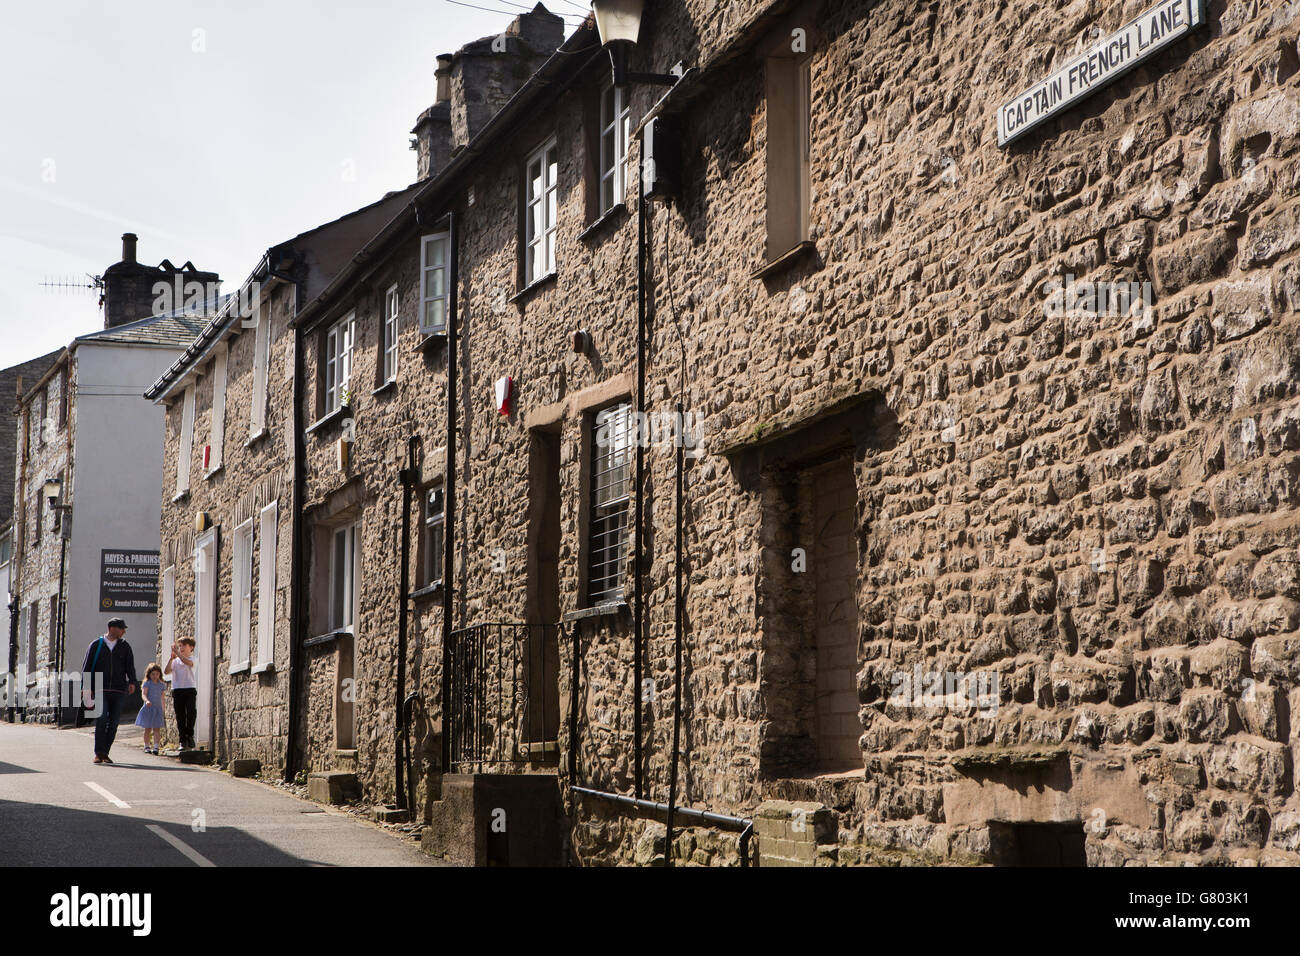 UK, Cumbria, Kendal, Captain French Lane, old stone buildings Stock Photo